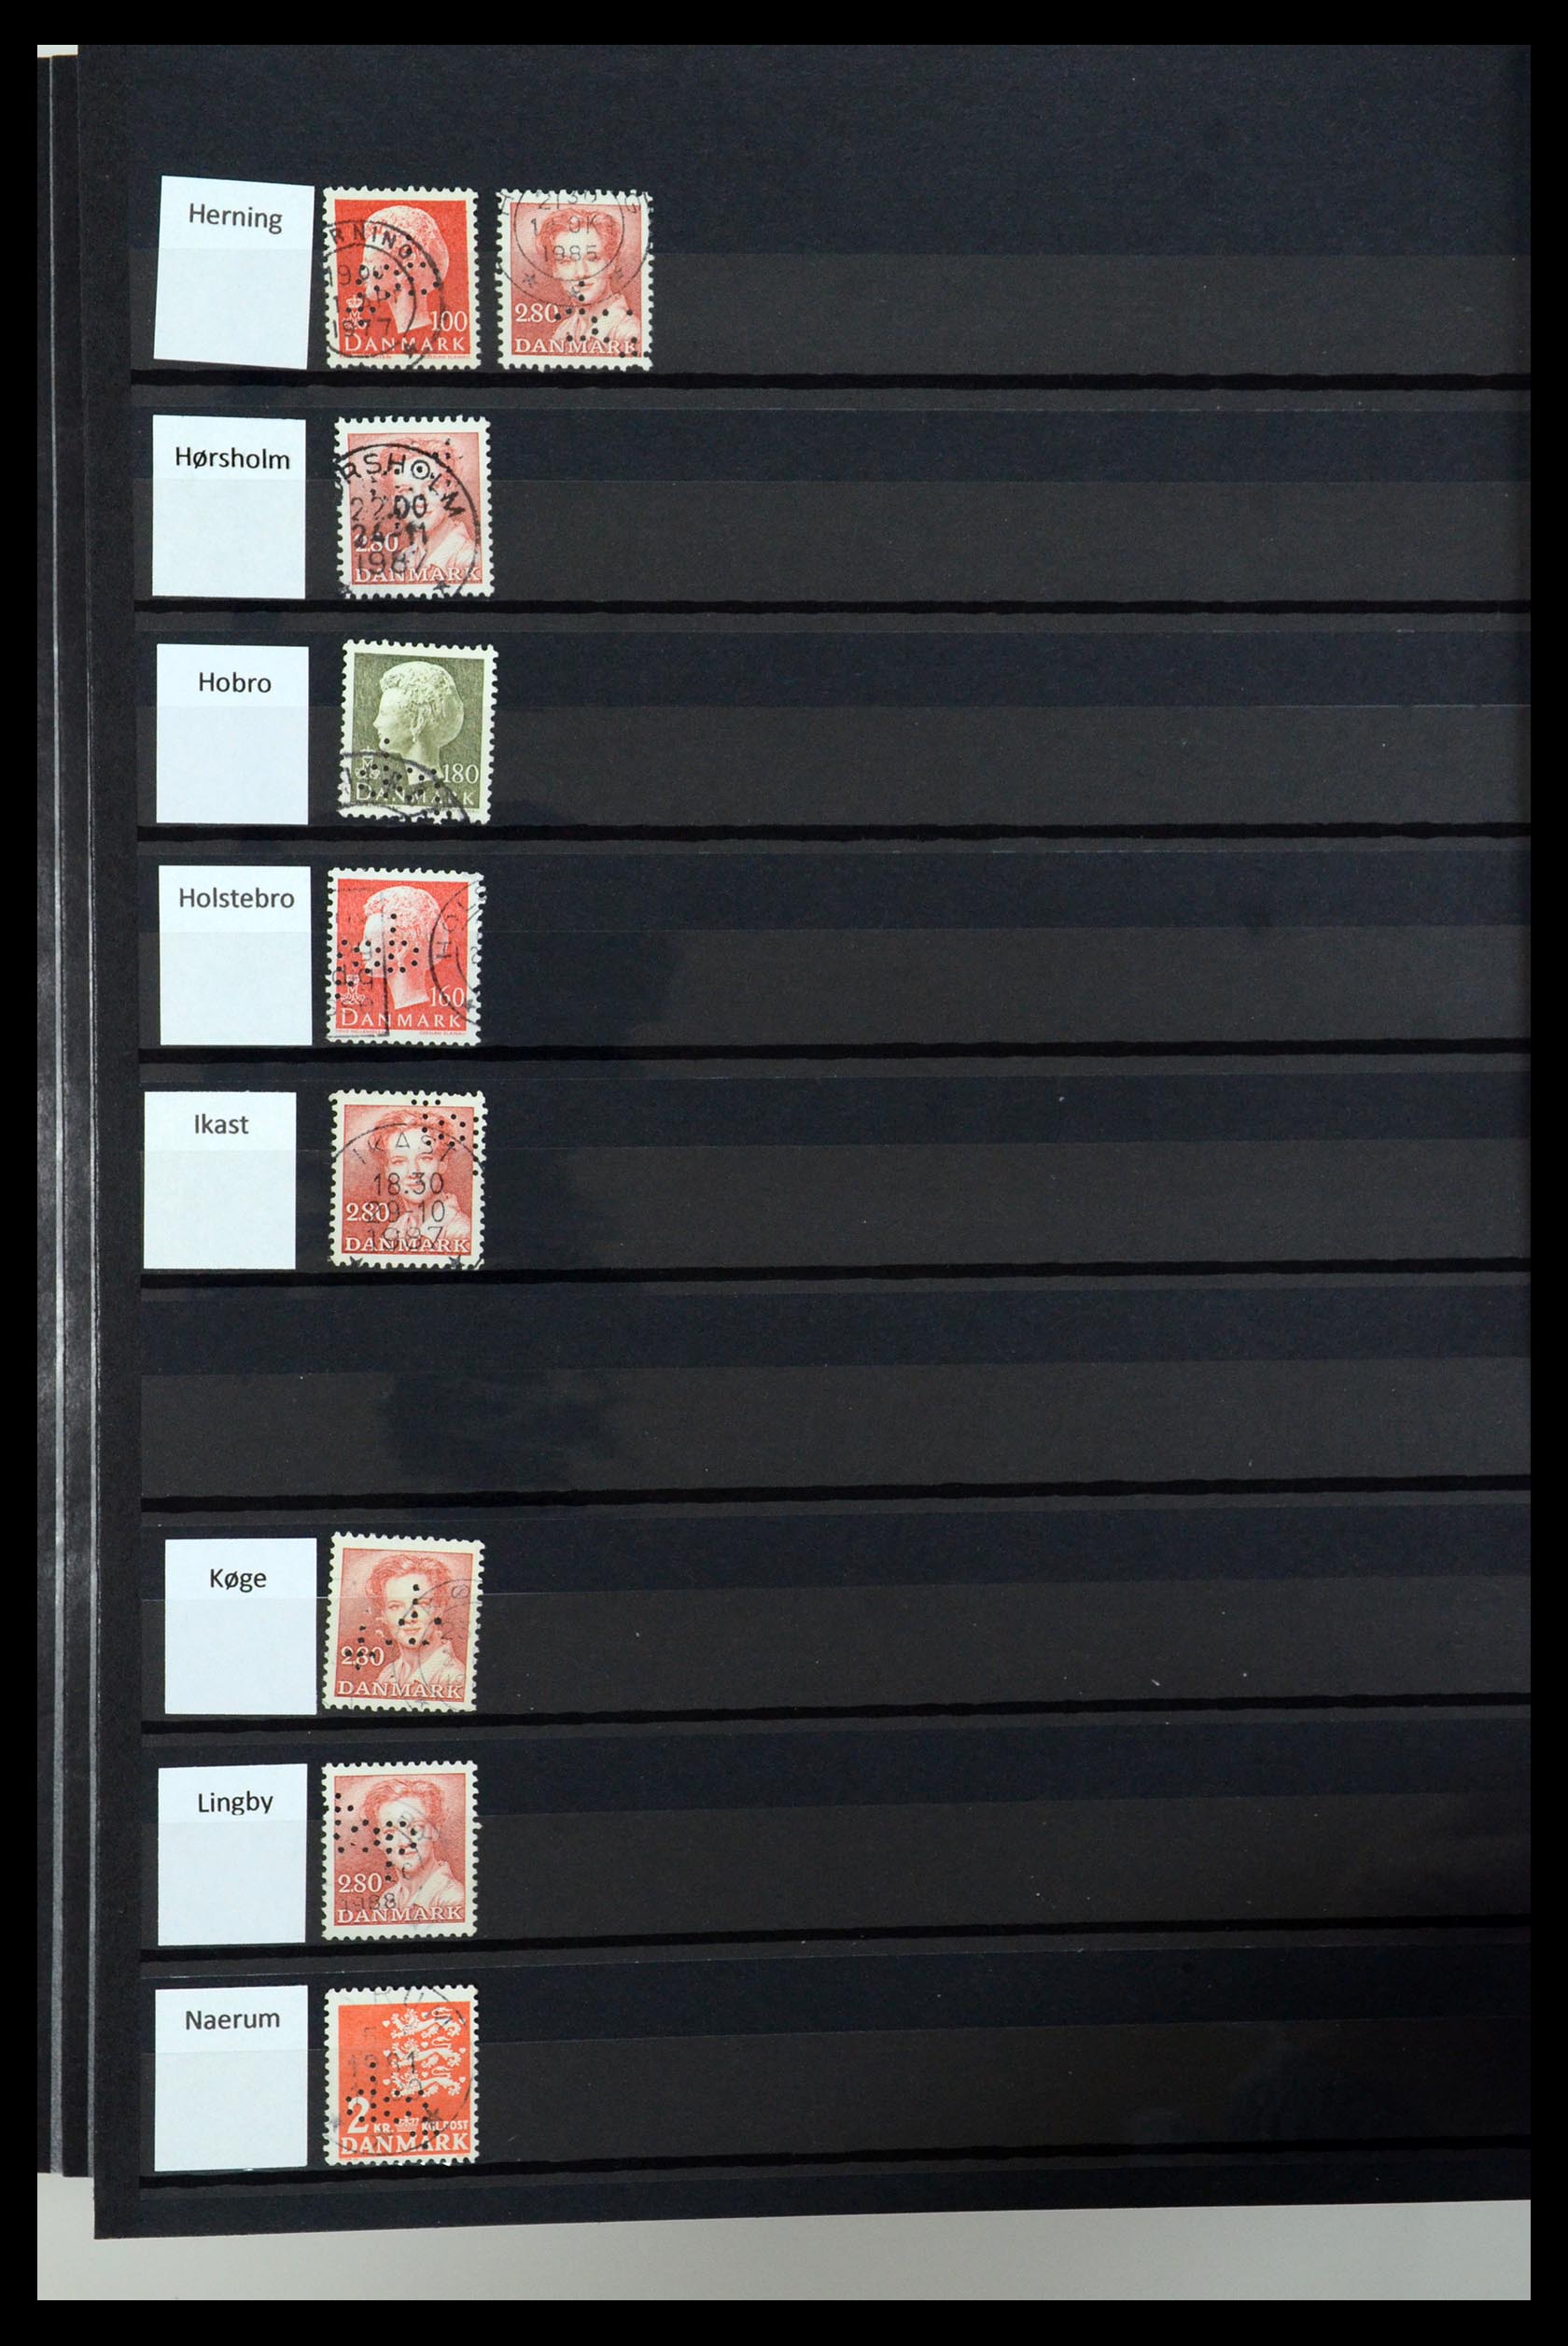 36396 107 - Stamp collection 36396 Denmark perfins.